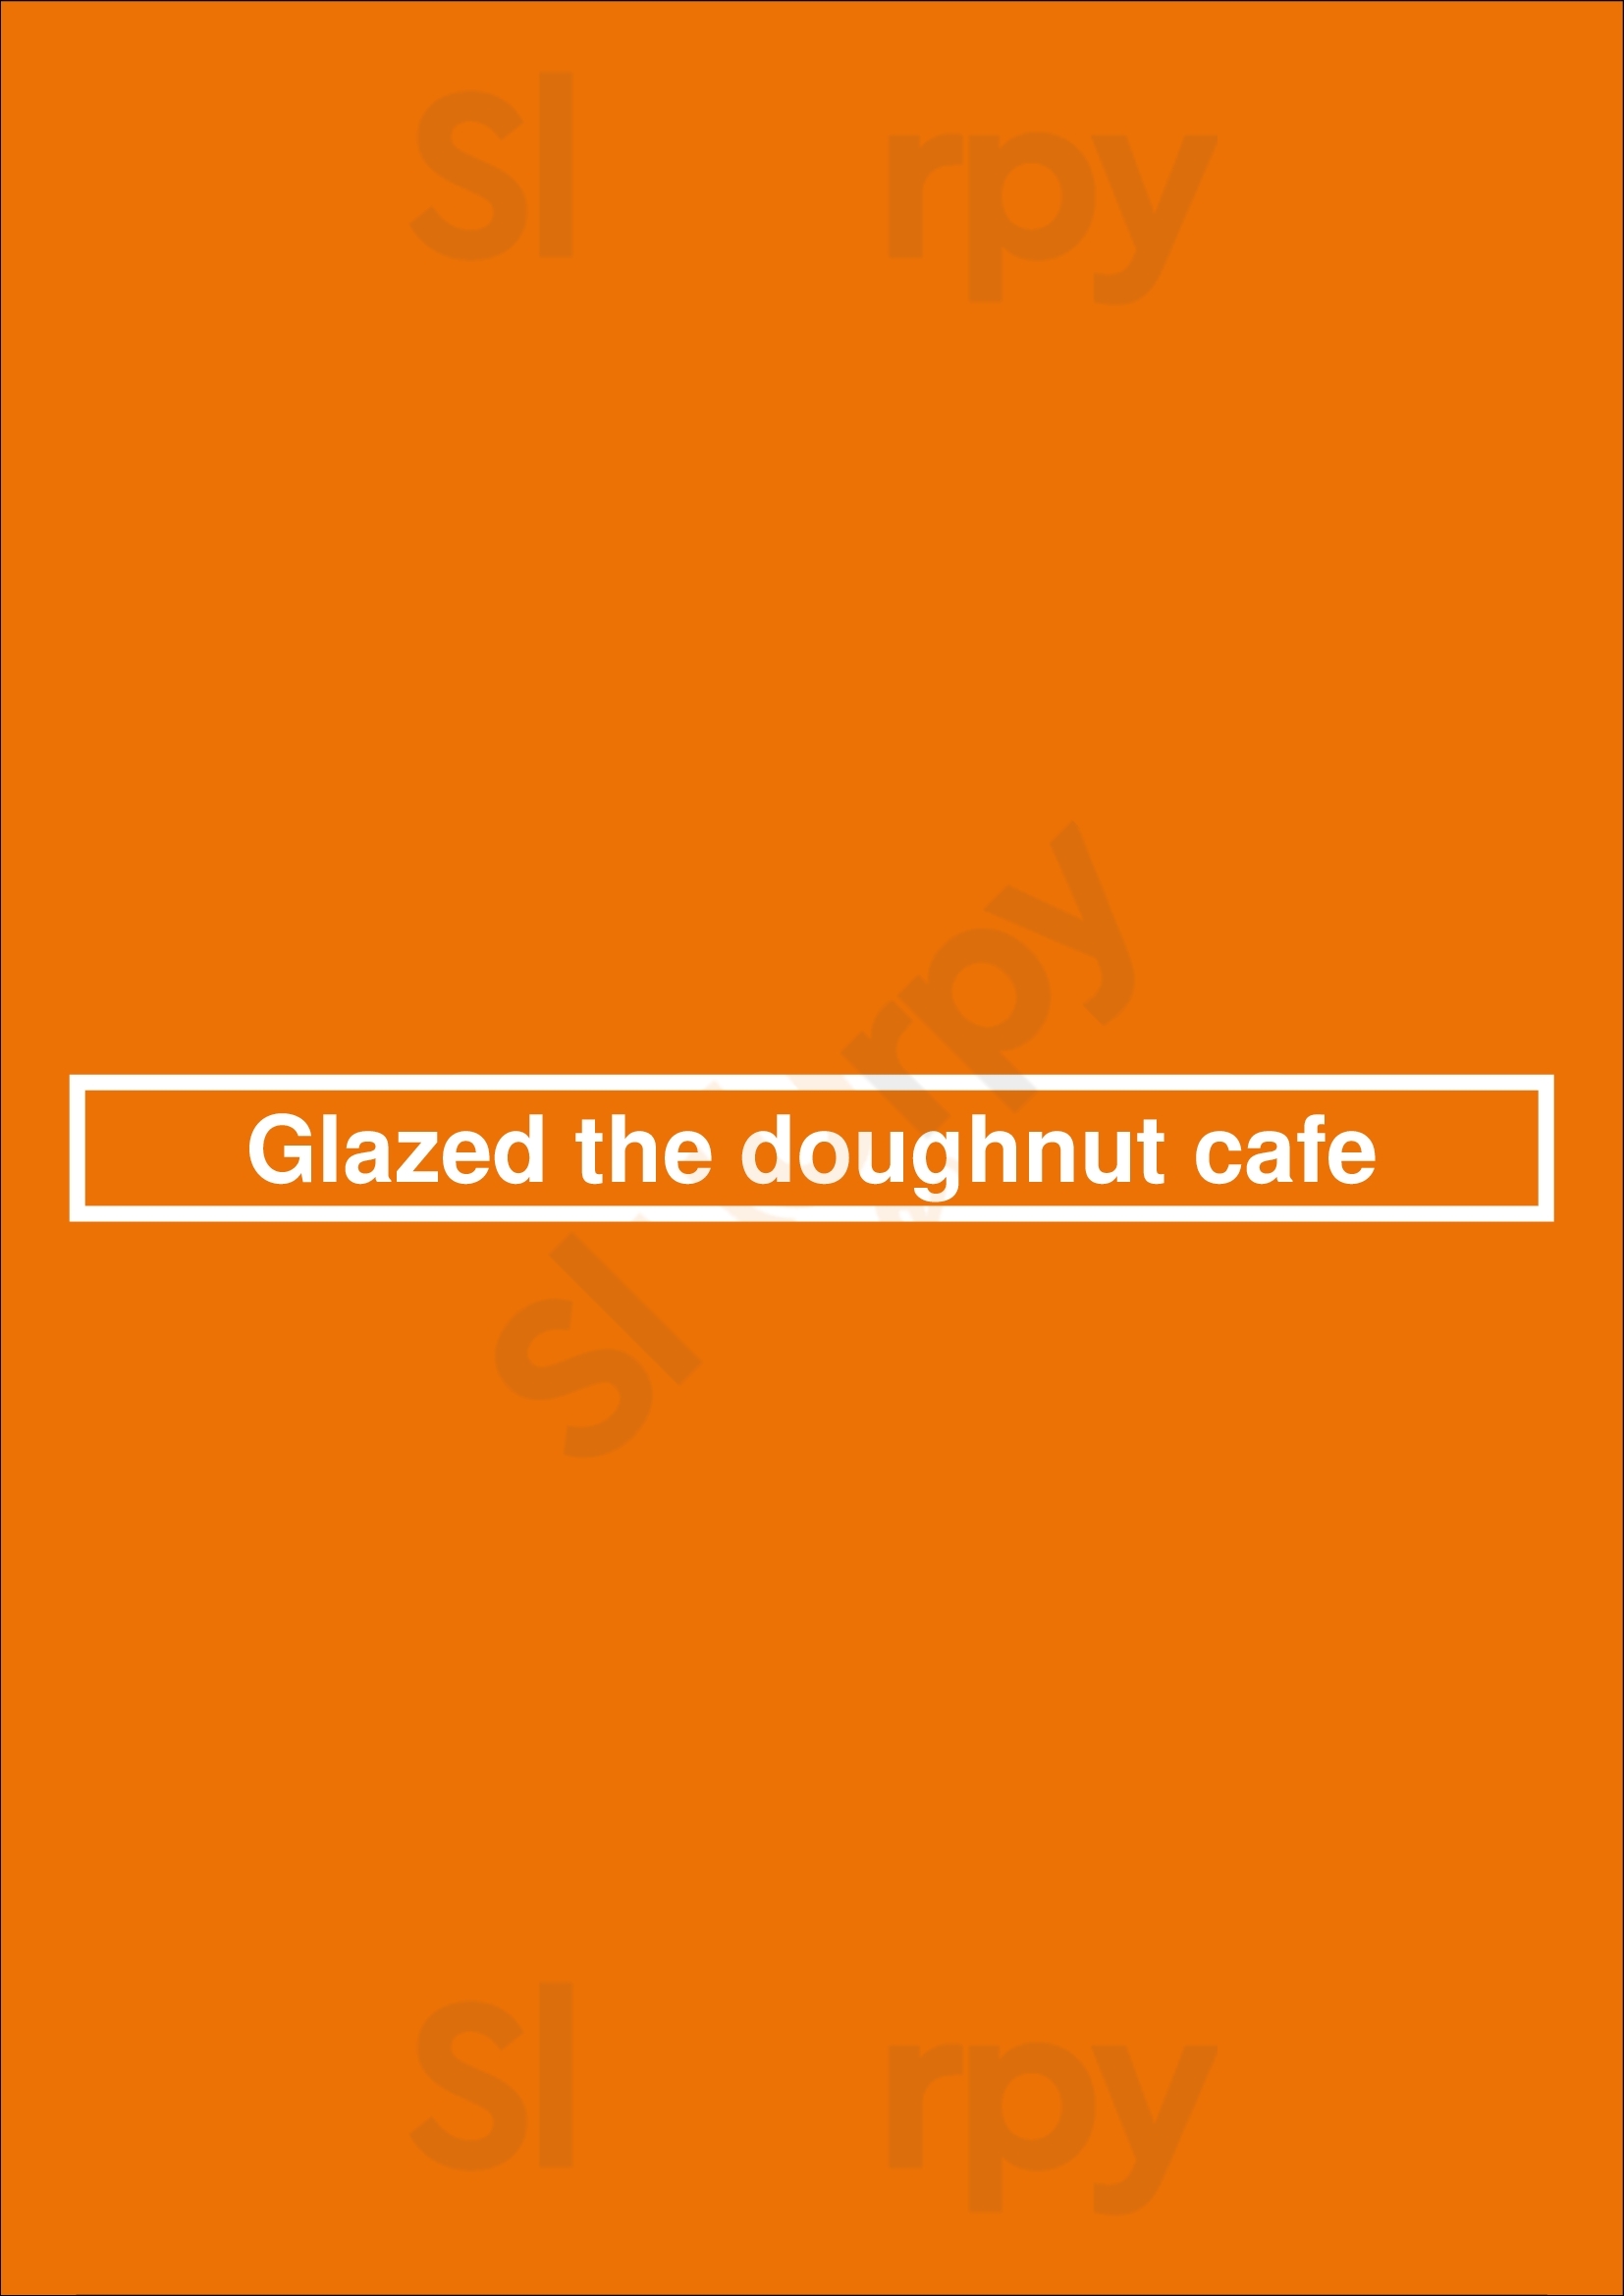 Glazed The Doughnut Cafe Houston Menu - 1